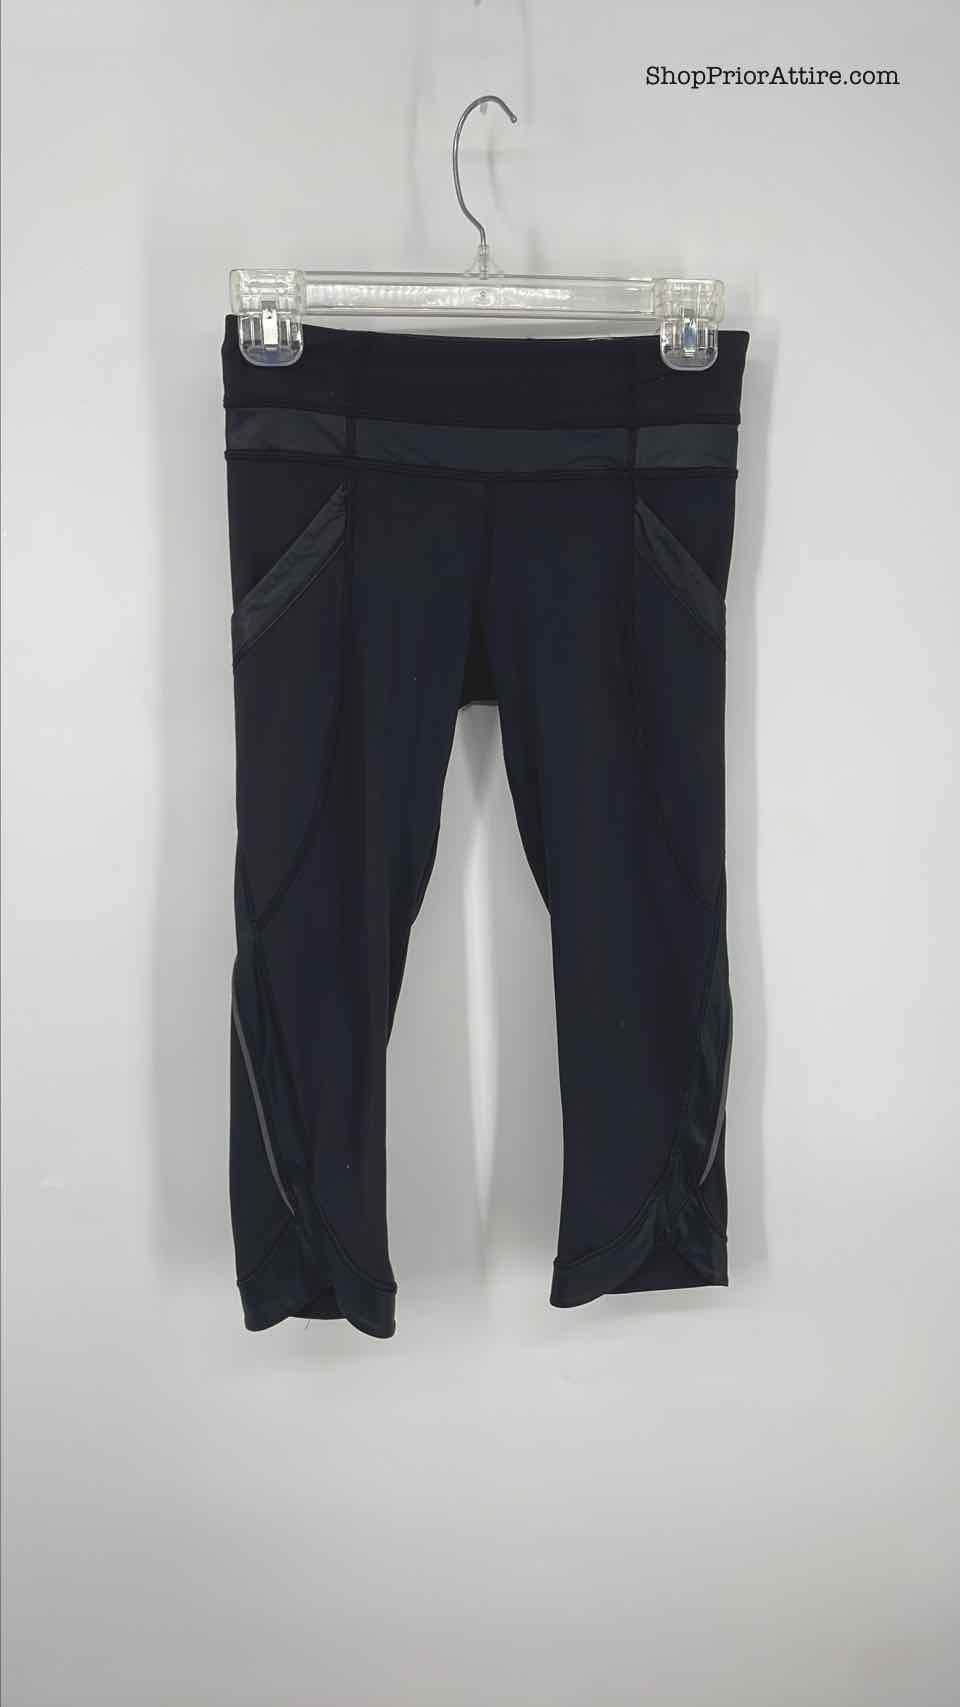 black lululemon leggings with pockets and mesh on